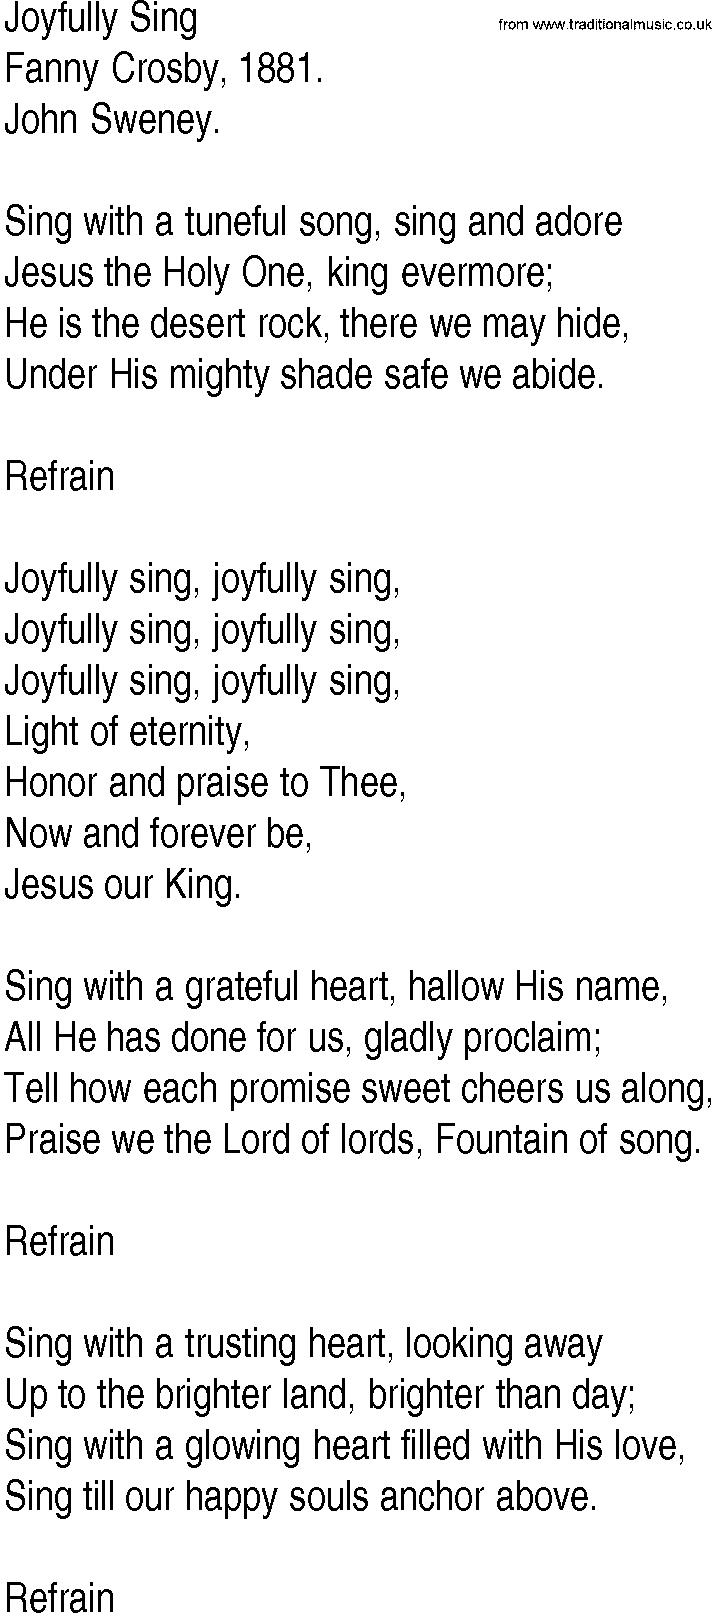 Hymn and Gospel Song: Joyfully Sing by Fanny Crosby lyrics